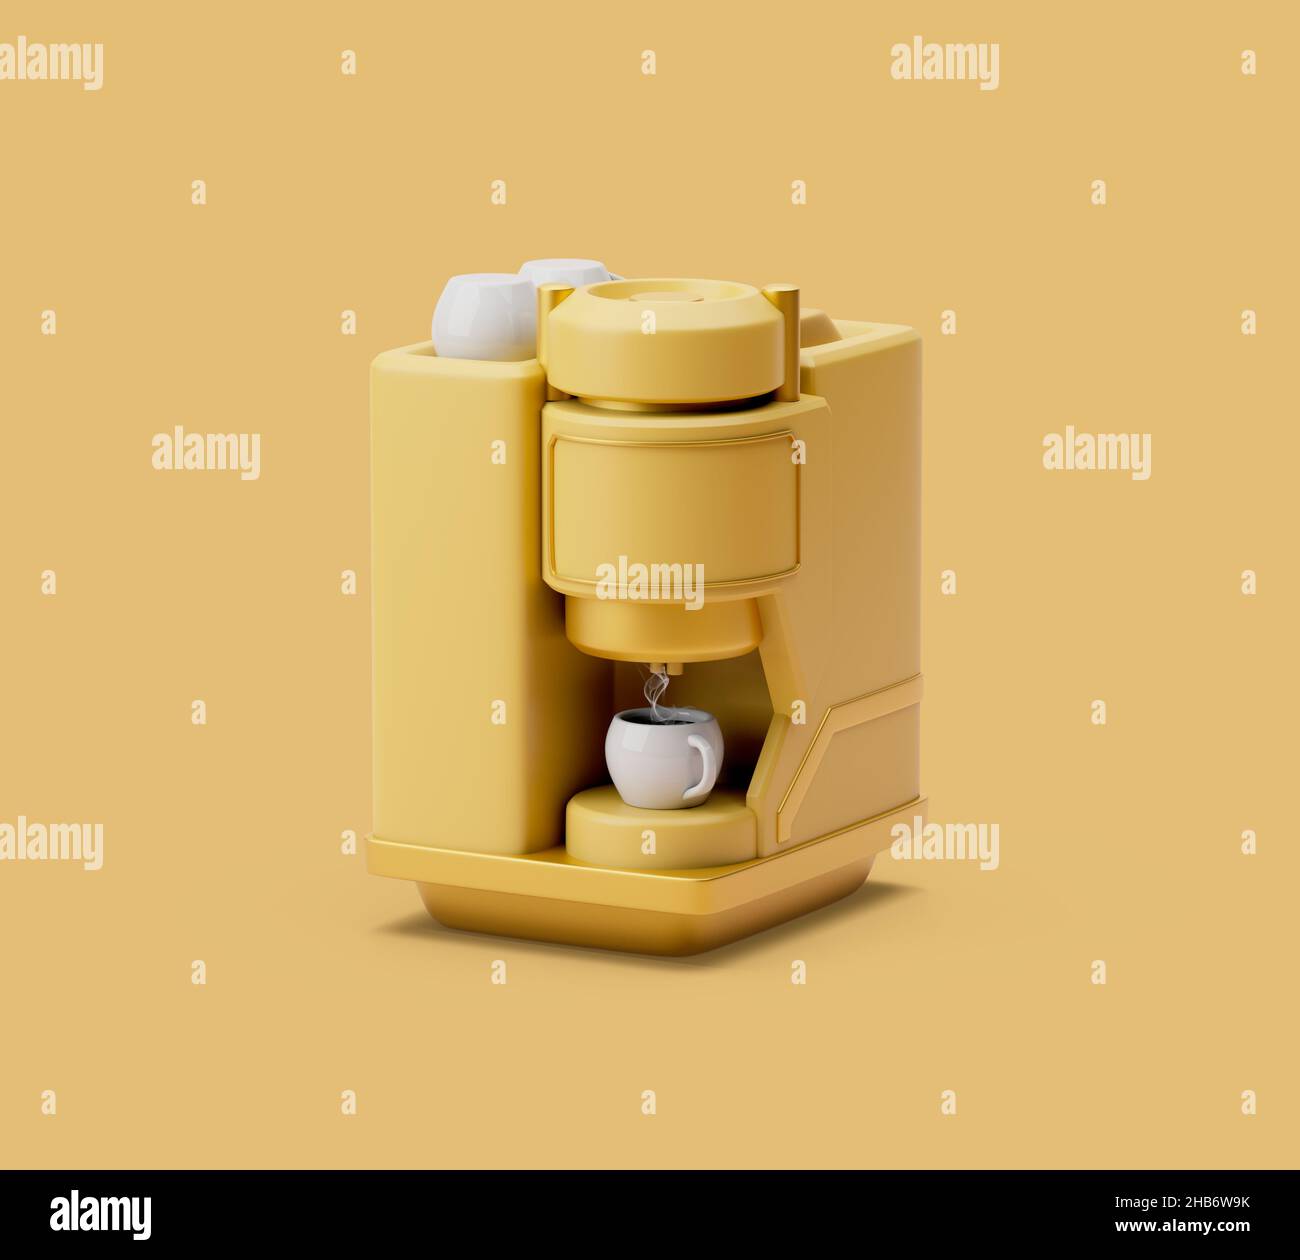 https://c8.alamy.com/compes/2hb6w9k/sencilla-cafetera-automatica-con-una-taza-de-cafe-3d-que-representa-la-ilustracion-objeto-aislado-sobre-fondo-amarillo-2hb6w9k.jpg